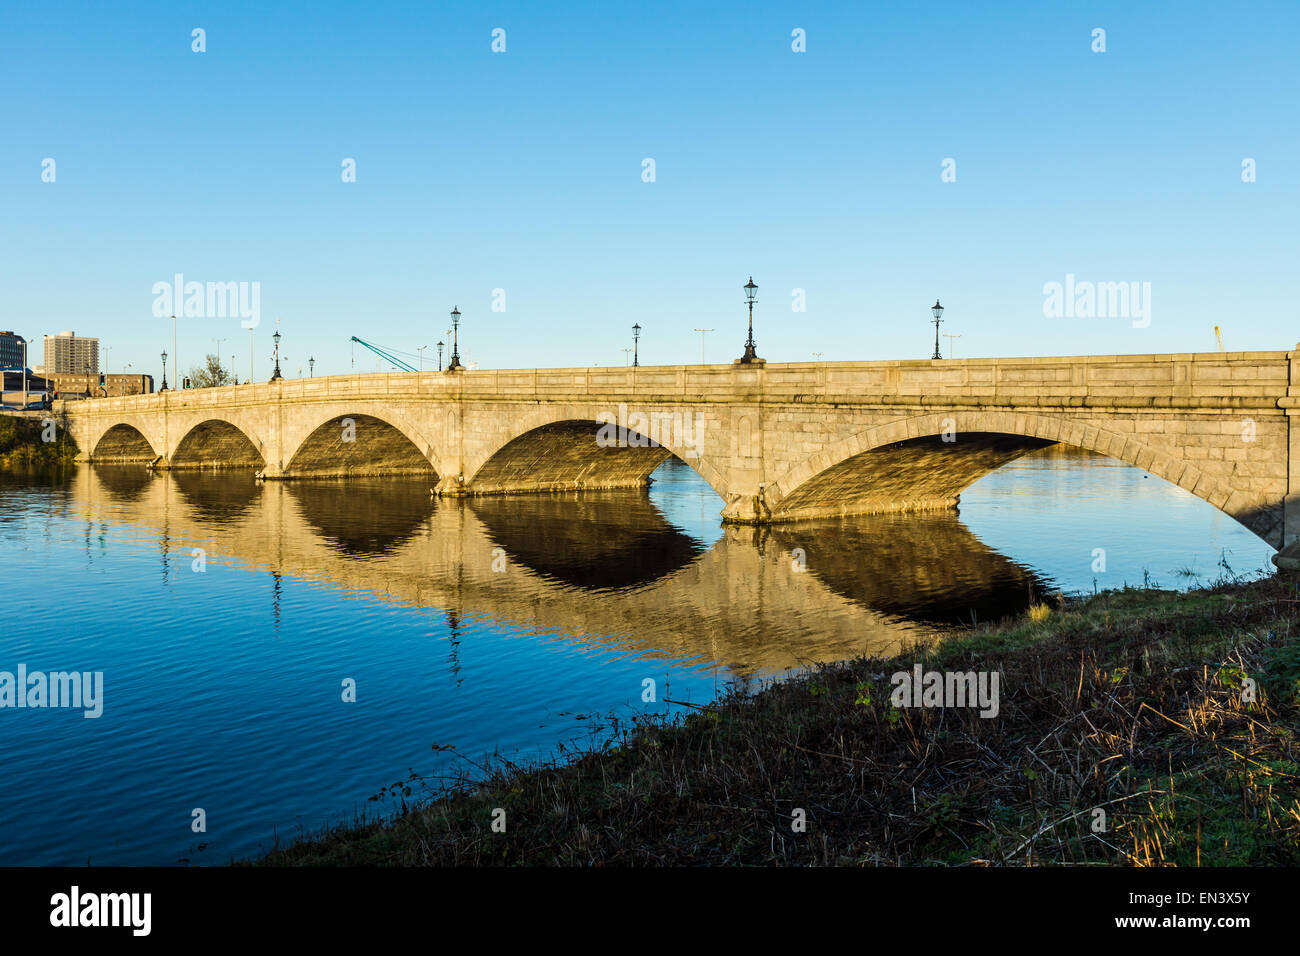 Victoria-Brücke überquert den Fluss Dee in Aberdeen, Schottland. Stockfoto